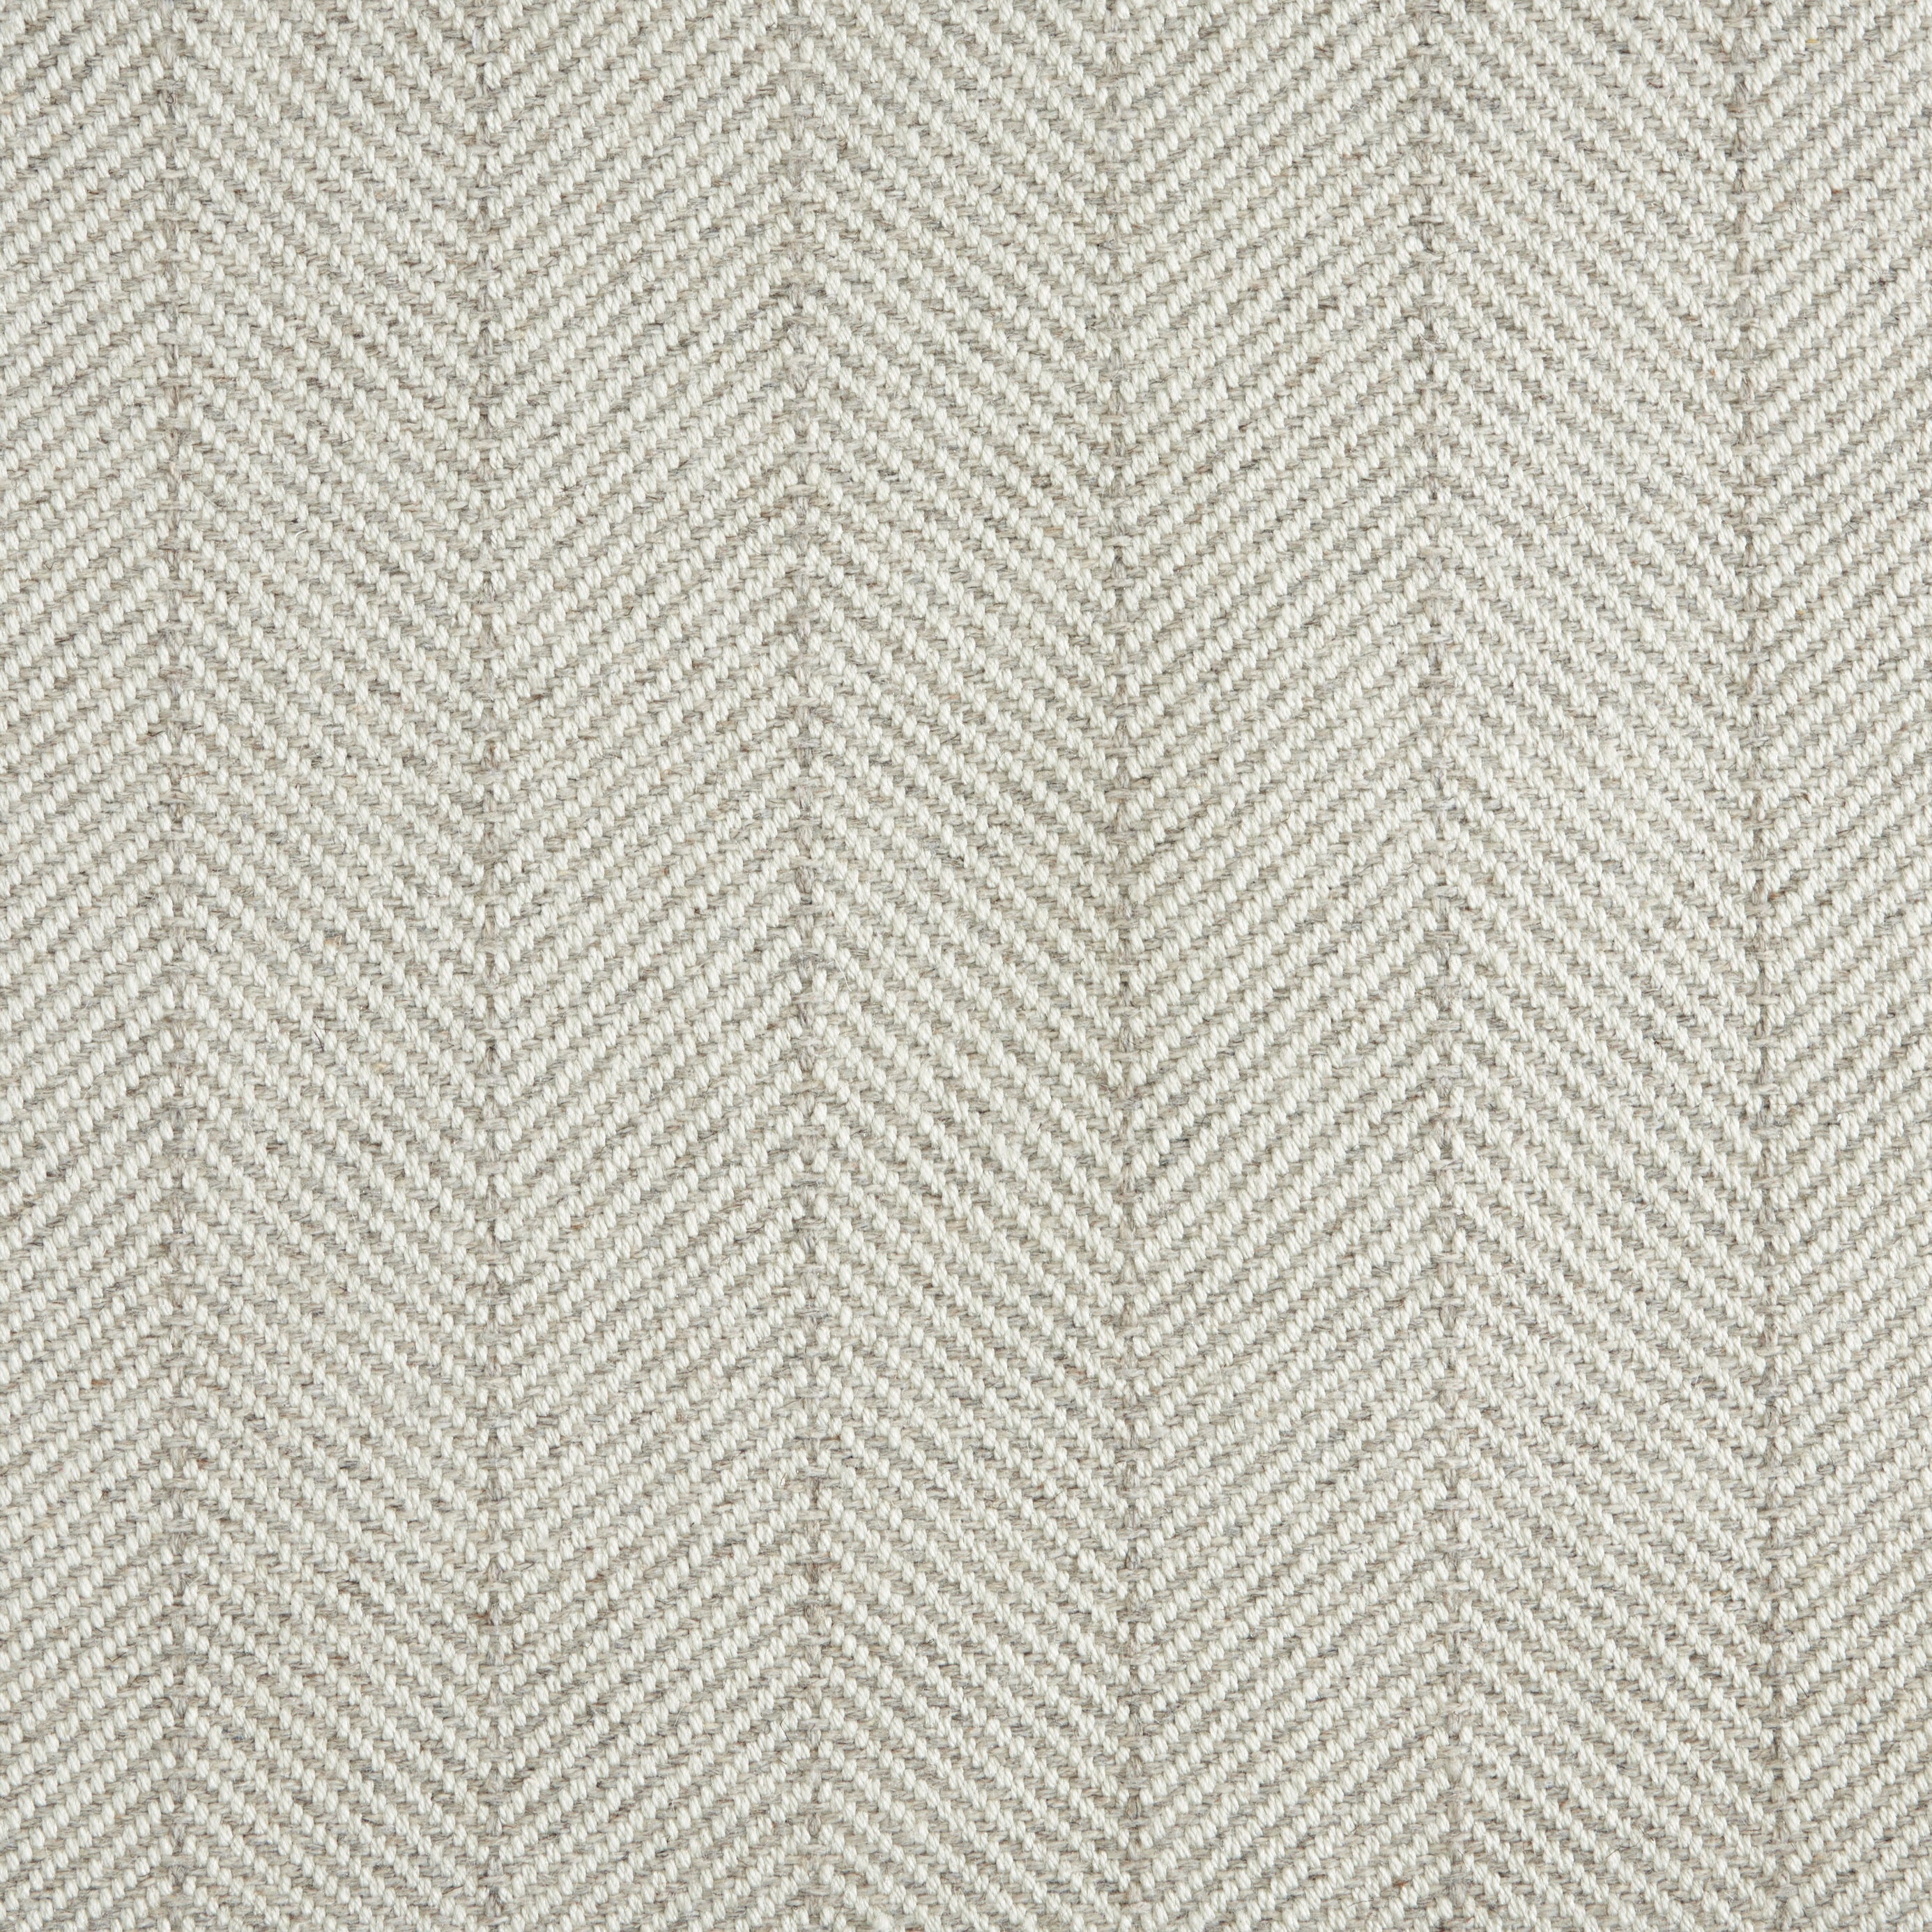 Wool-polysilk broadloom carpet swatch in a chevron stripe pattern in cream and gray.